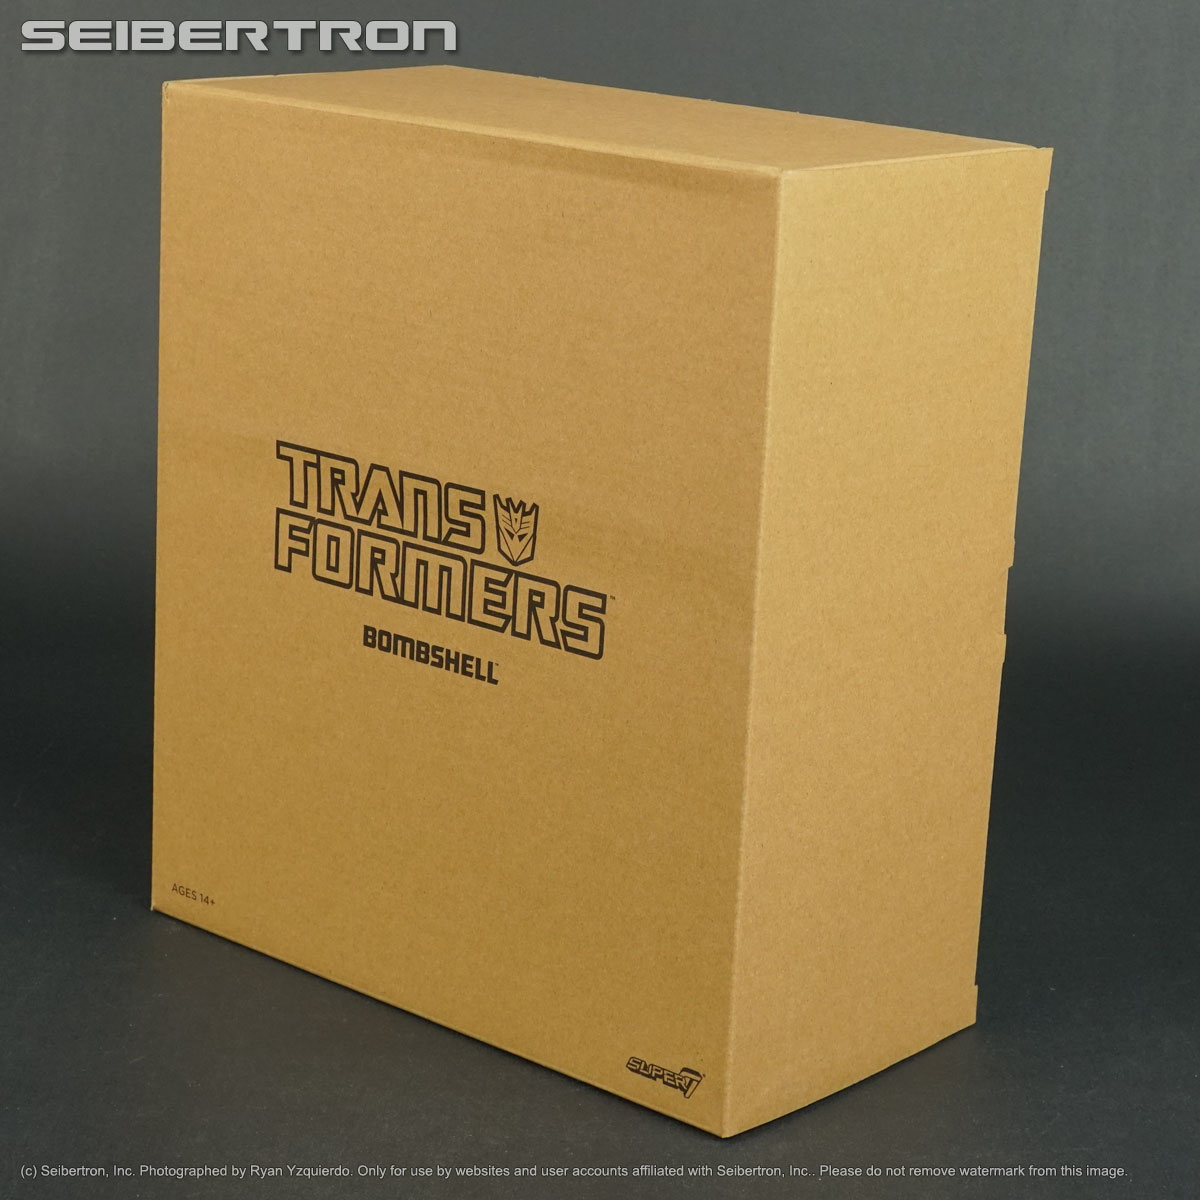 BOMBSHELL Transformers Super7 Ultimates 7